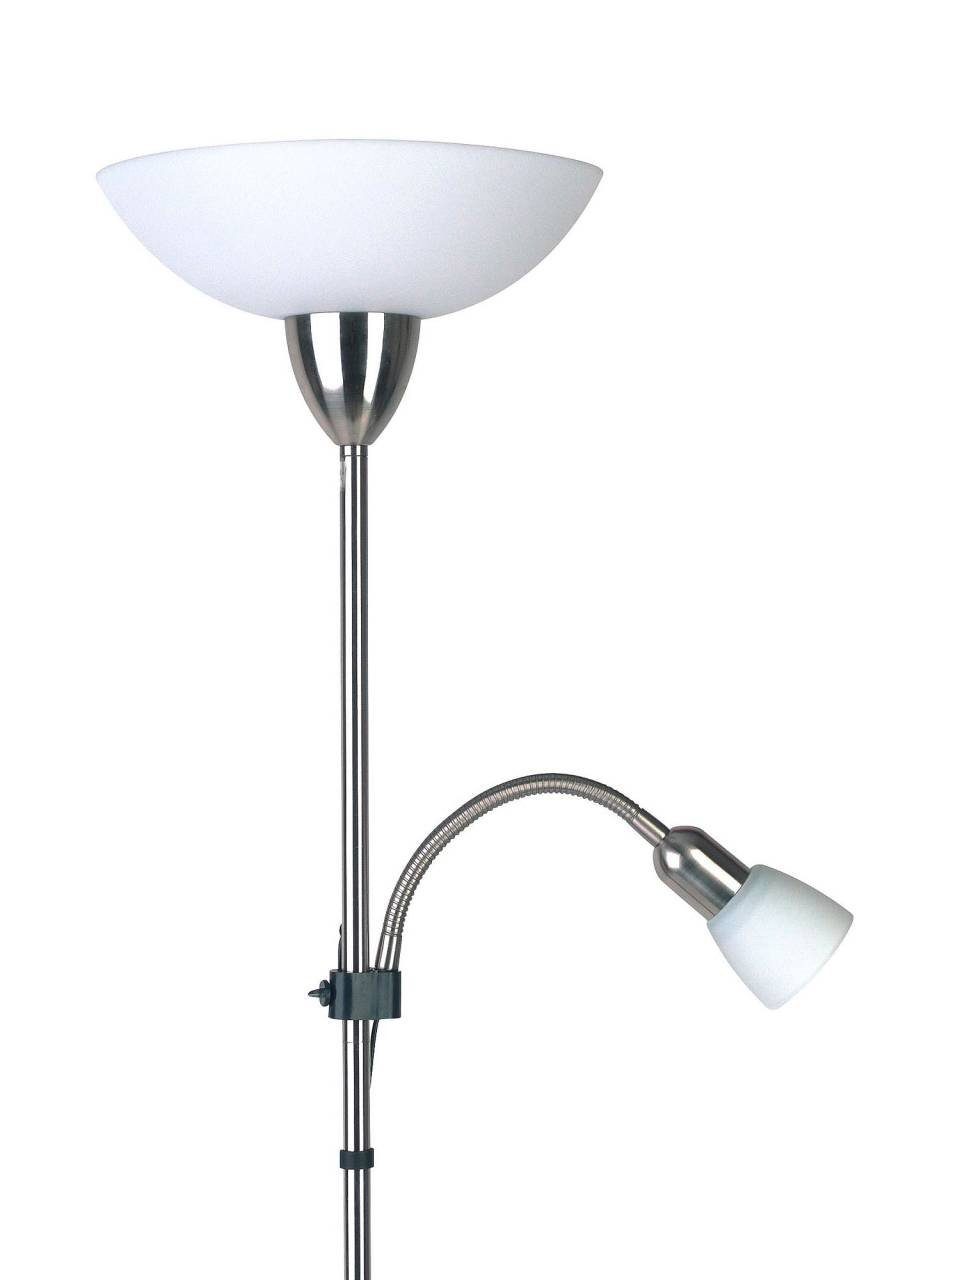 Stehlampe A60, Darlington, Lesearm E27, 1x Darlington Deckenfluter Brilliant Lampe 60W, eisen/weiß g